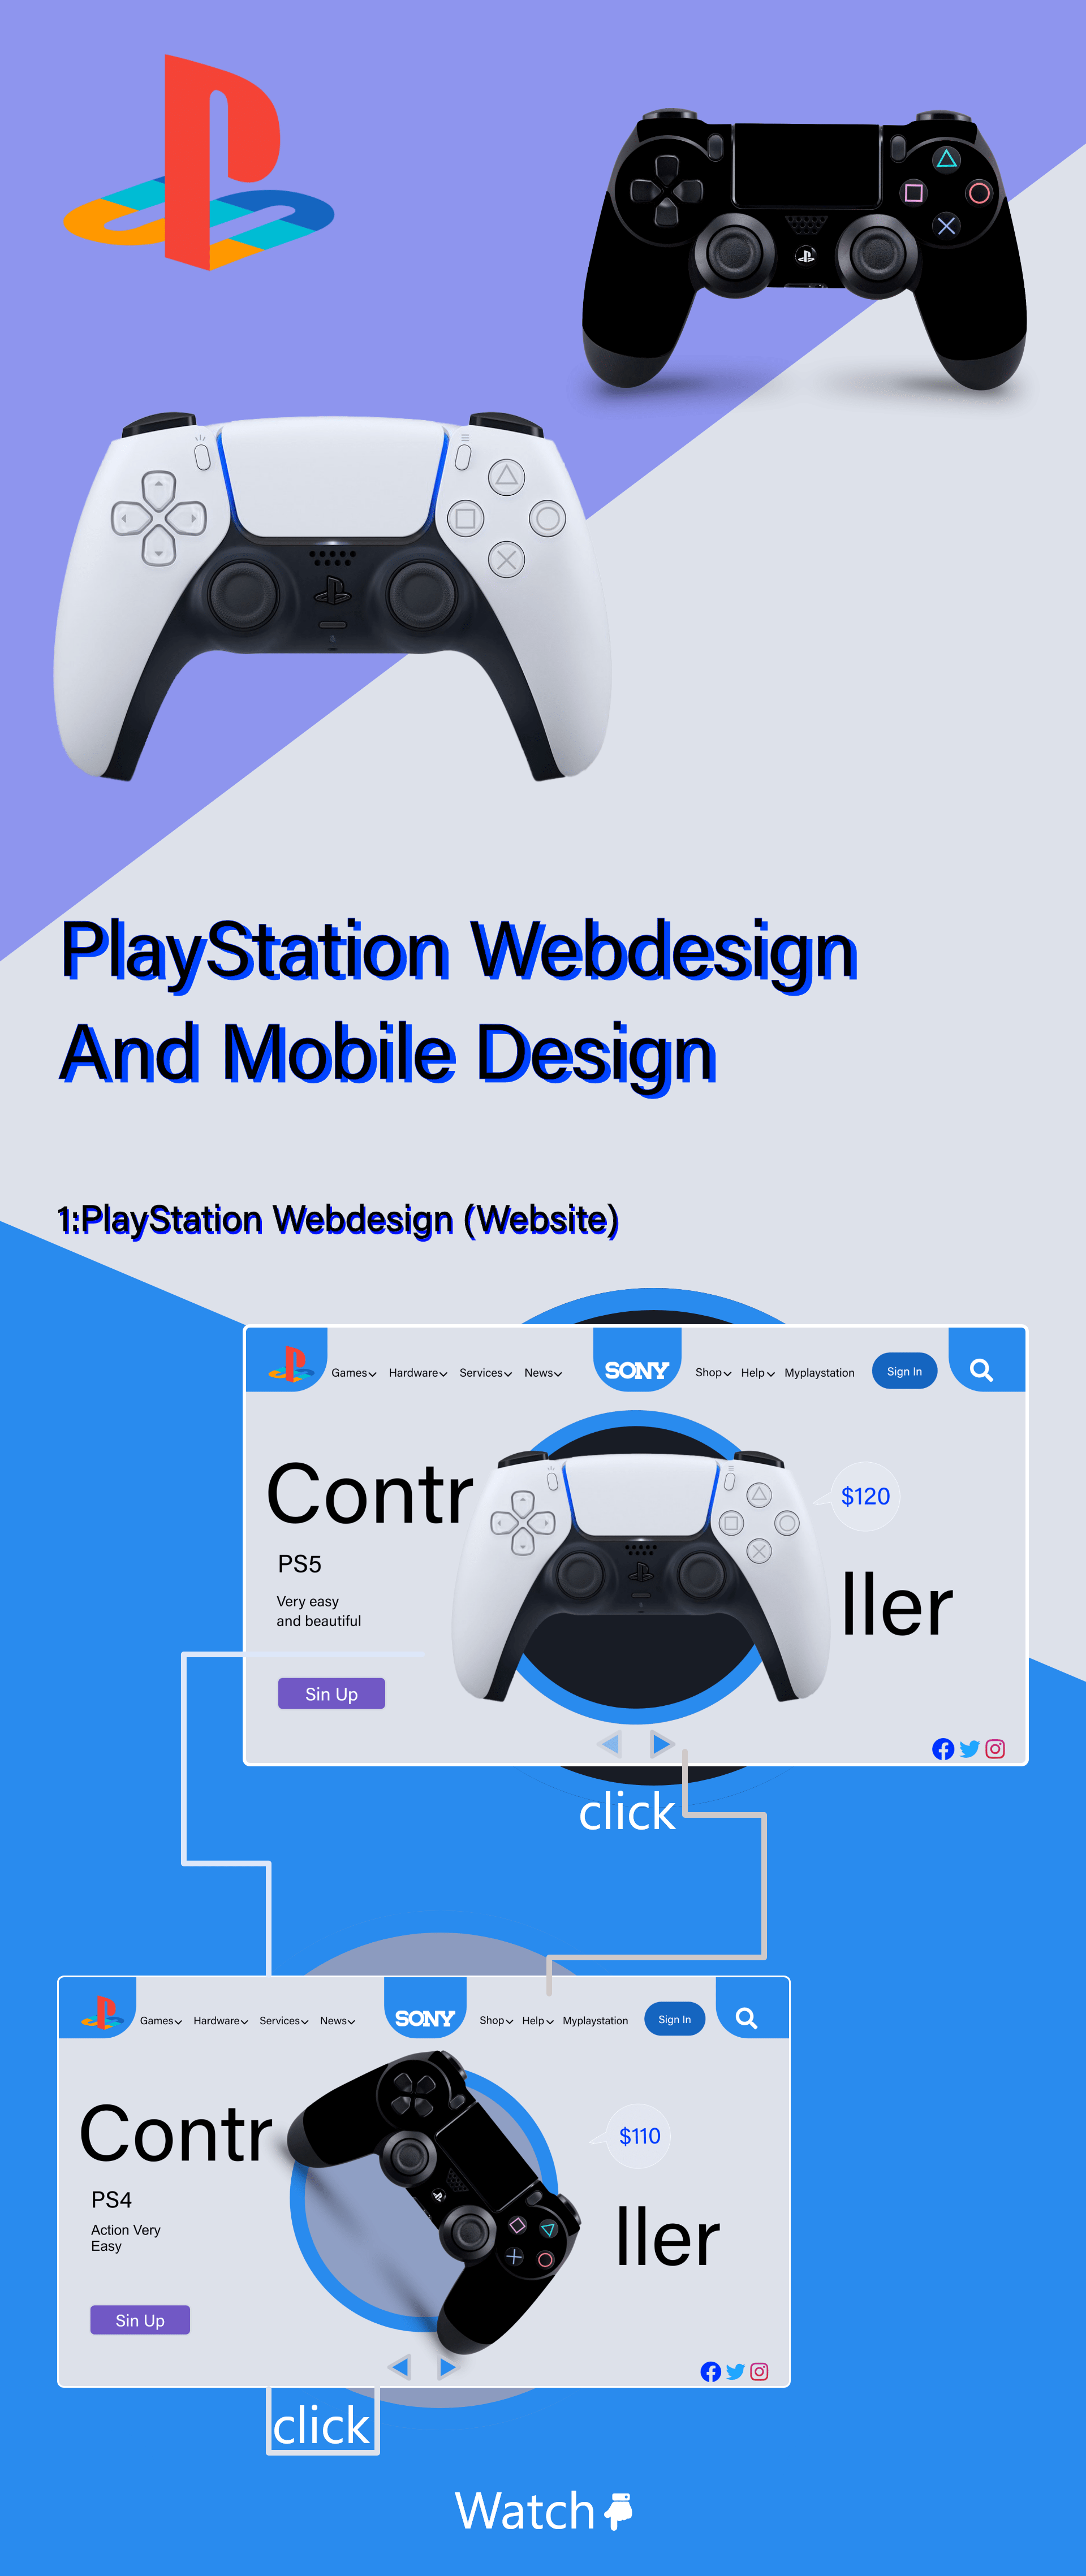 PlaySation5 Webdesign and mobildesign (prototype)